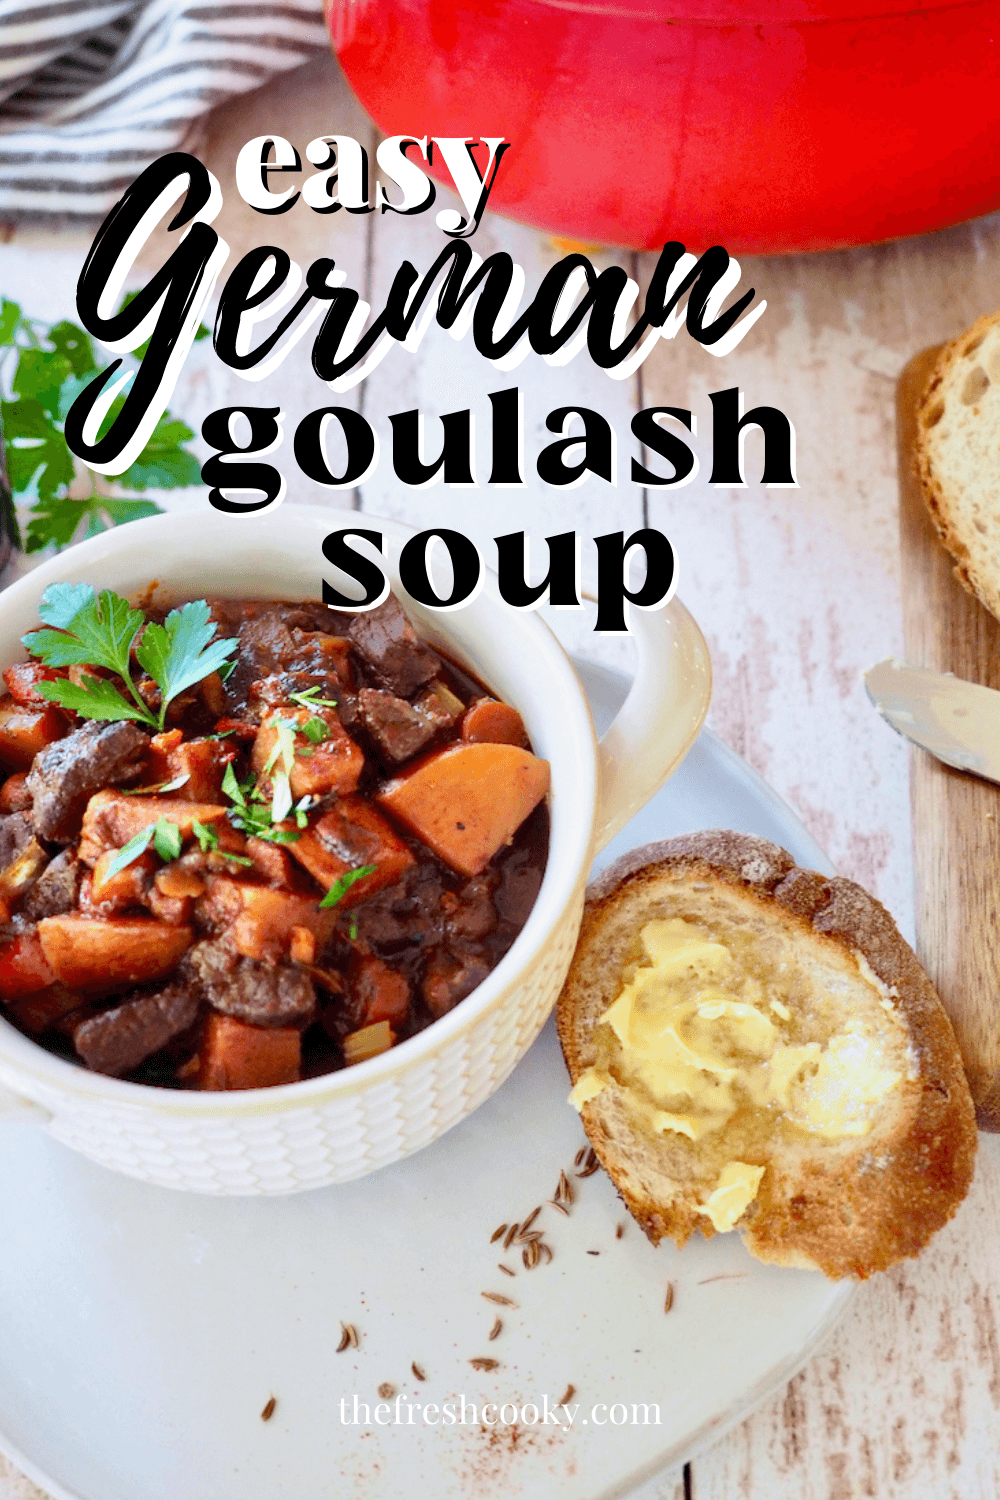 German goulash soup in bowl